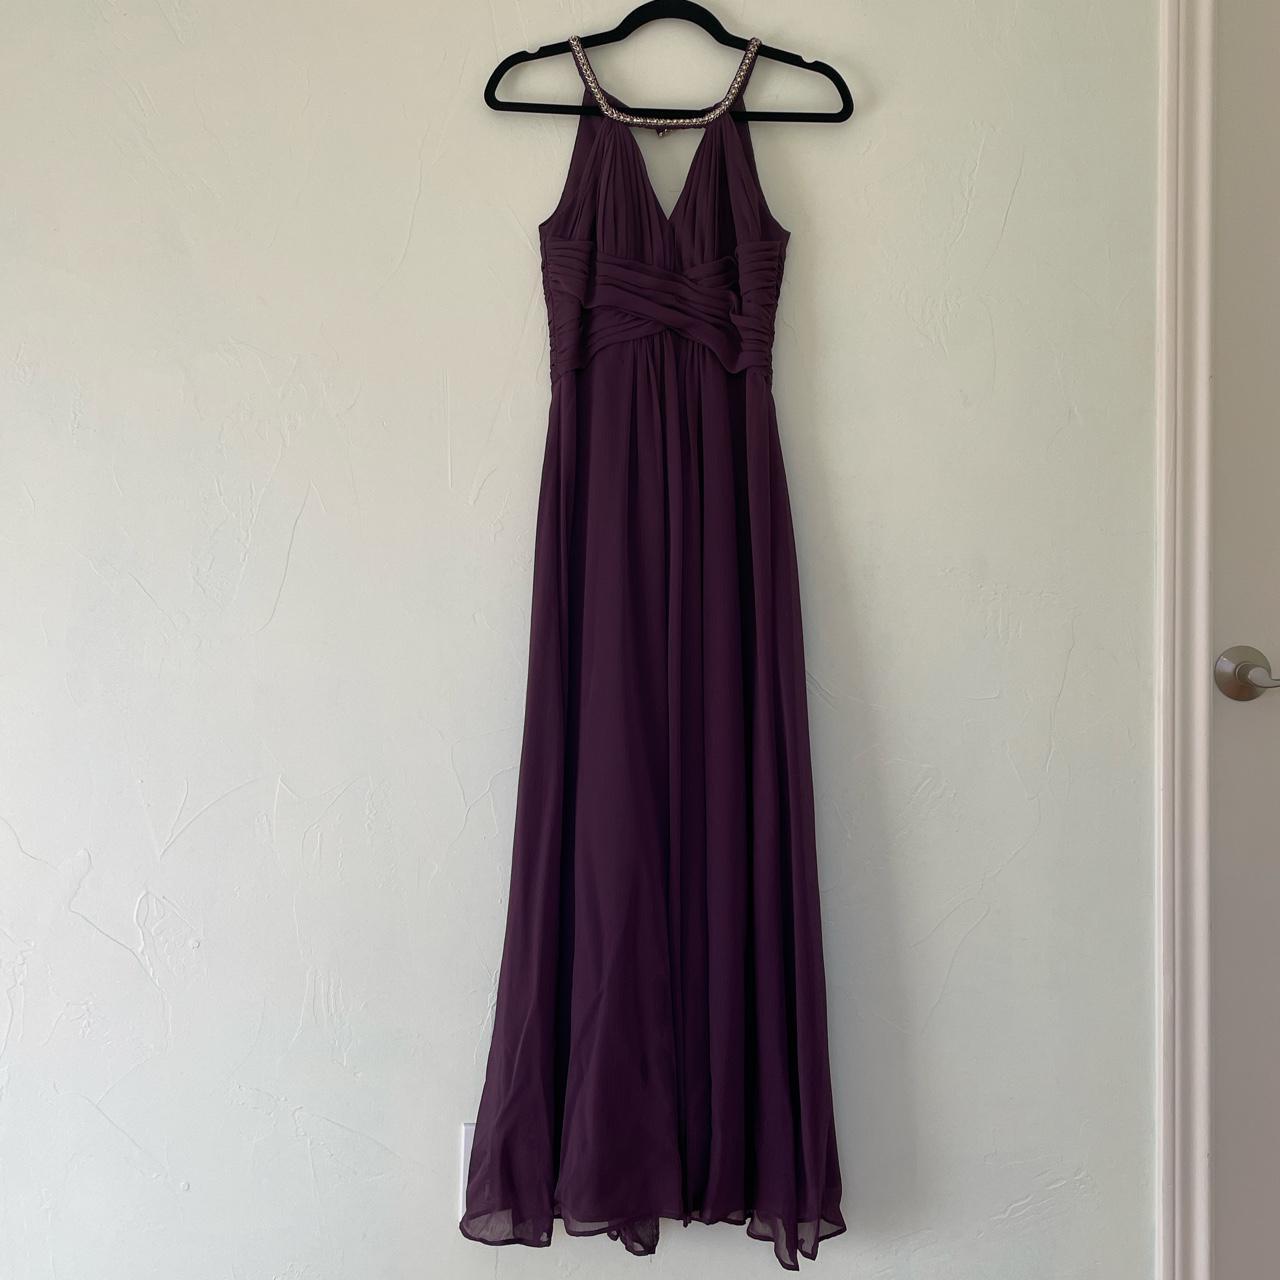 David's Bridal Women's Purple and Silver Dress (2)